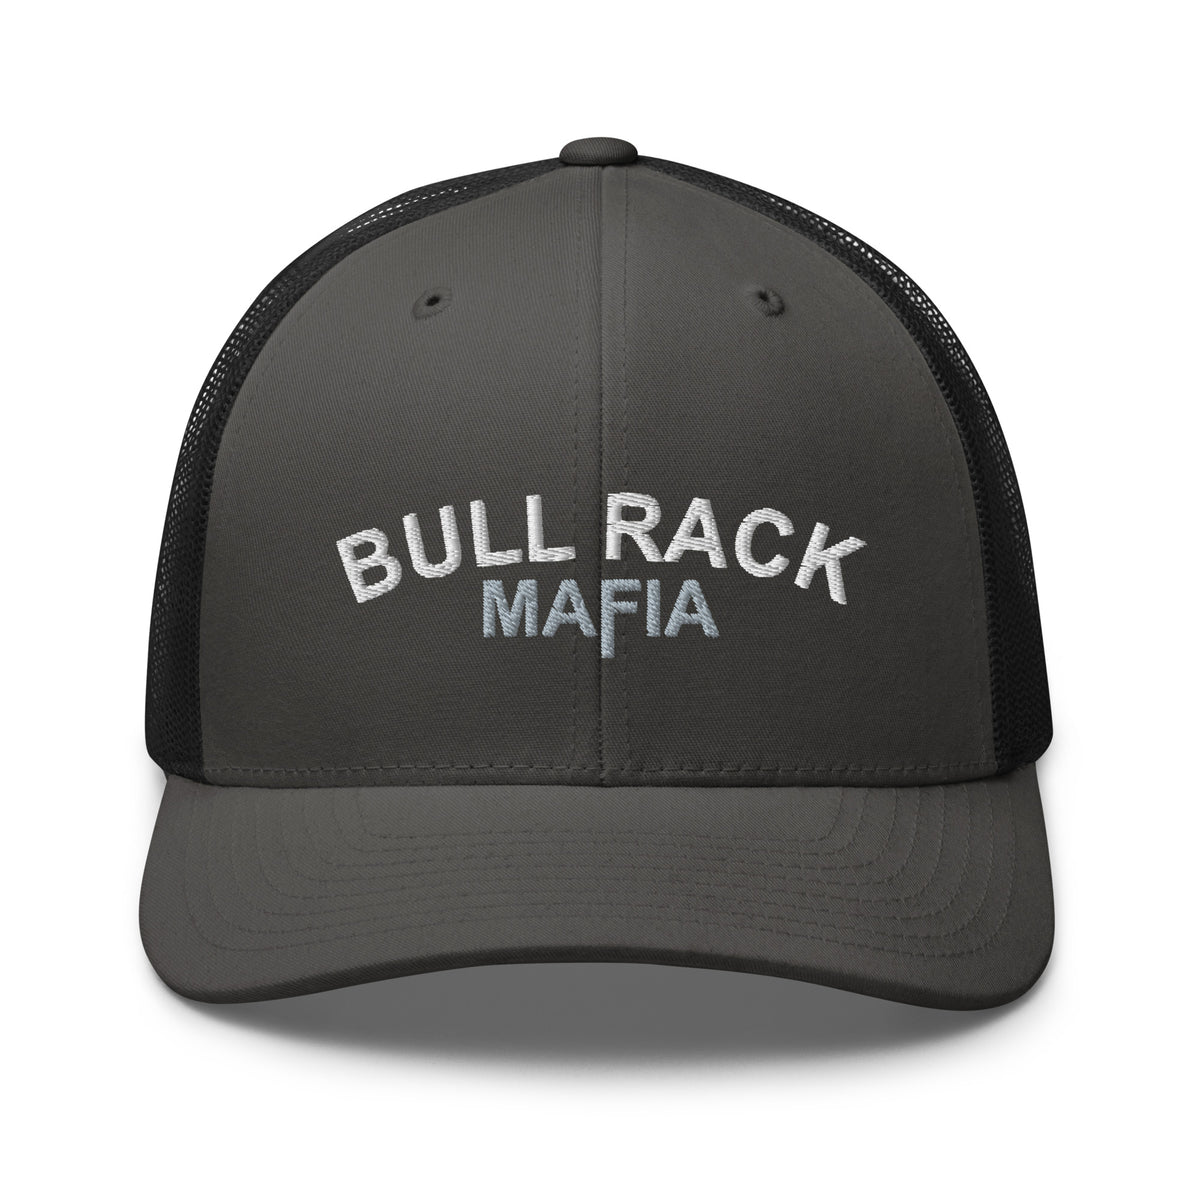 Bull Rack Mafia - Bull Hauler - Embroidered Hat - Free Shipping